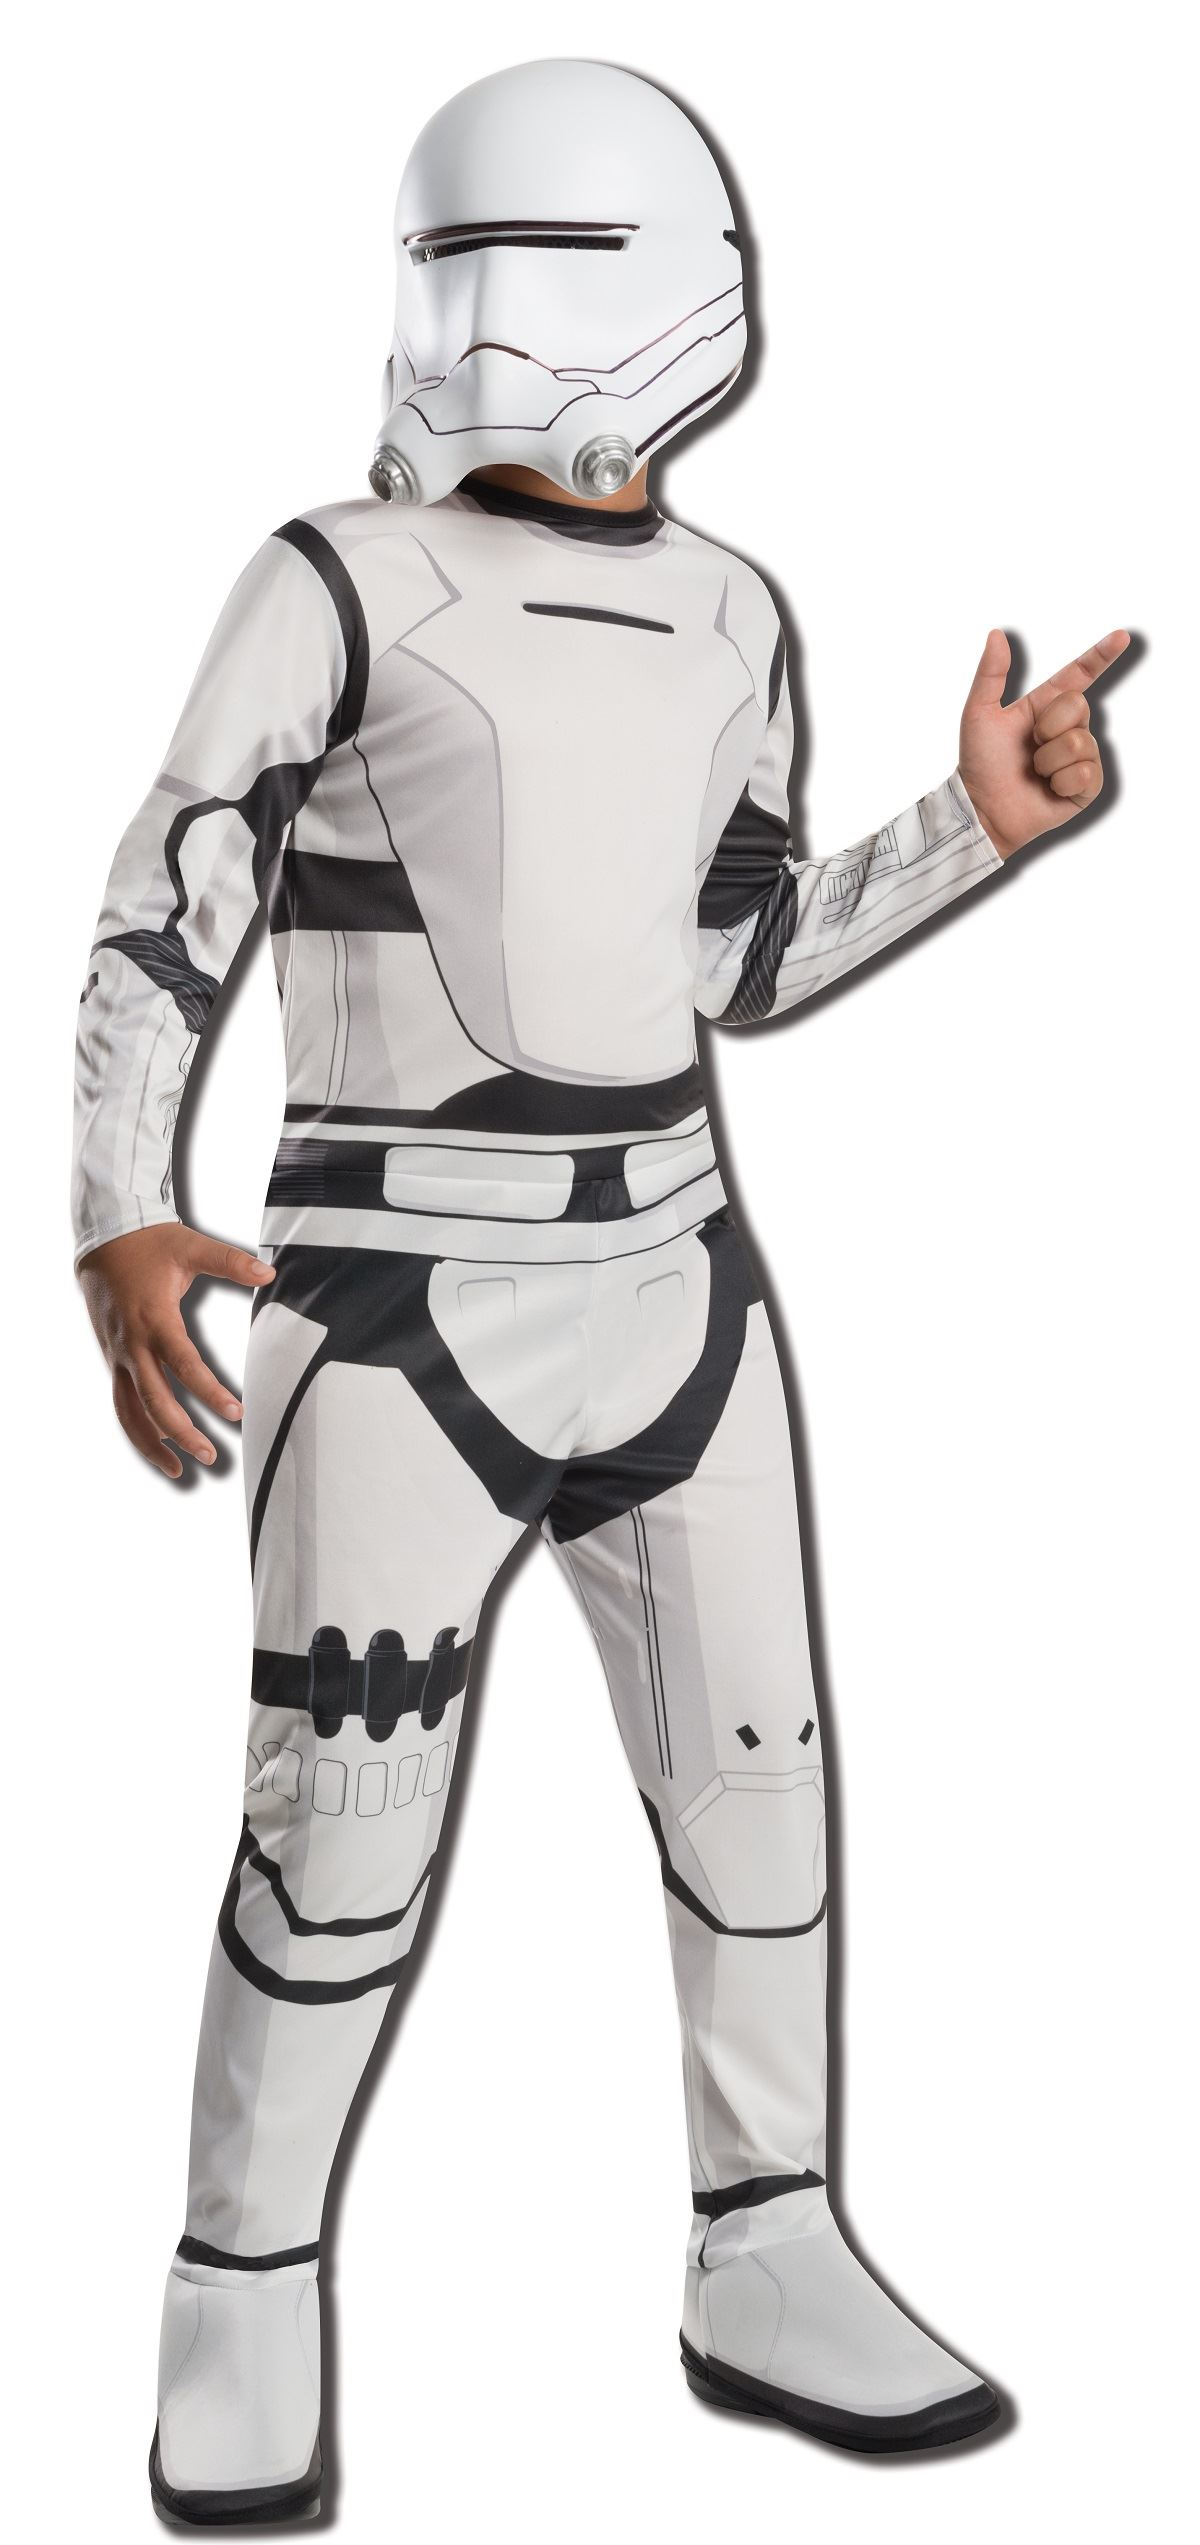 Kids Flametrooper Star Wars Costume | $27.99 | The Costume Land